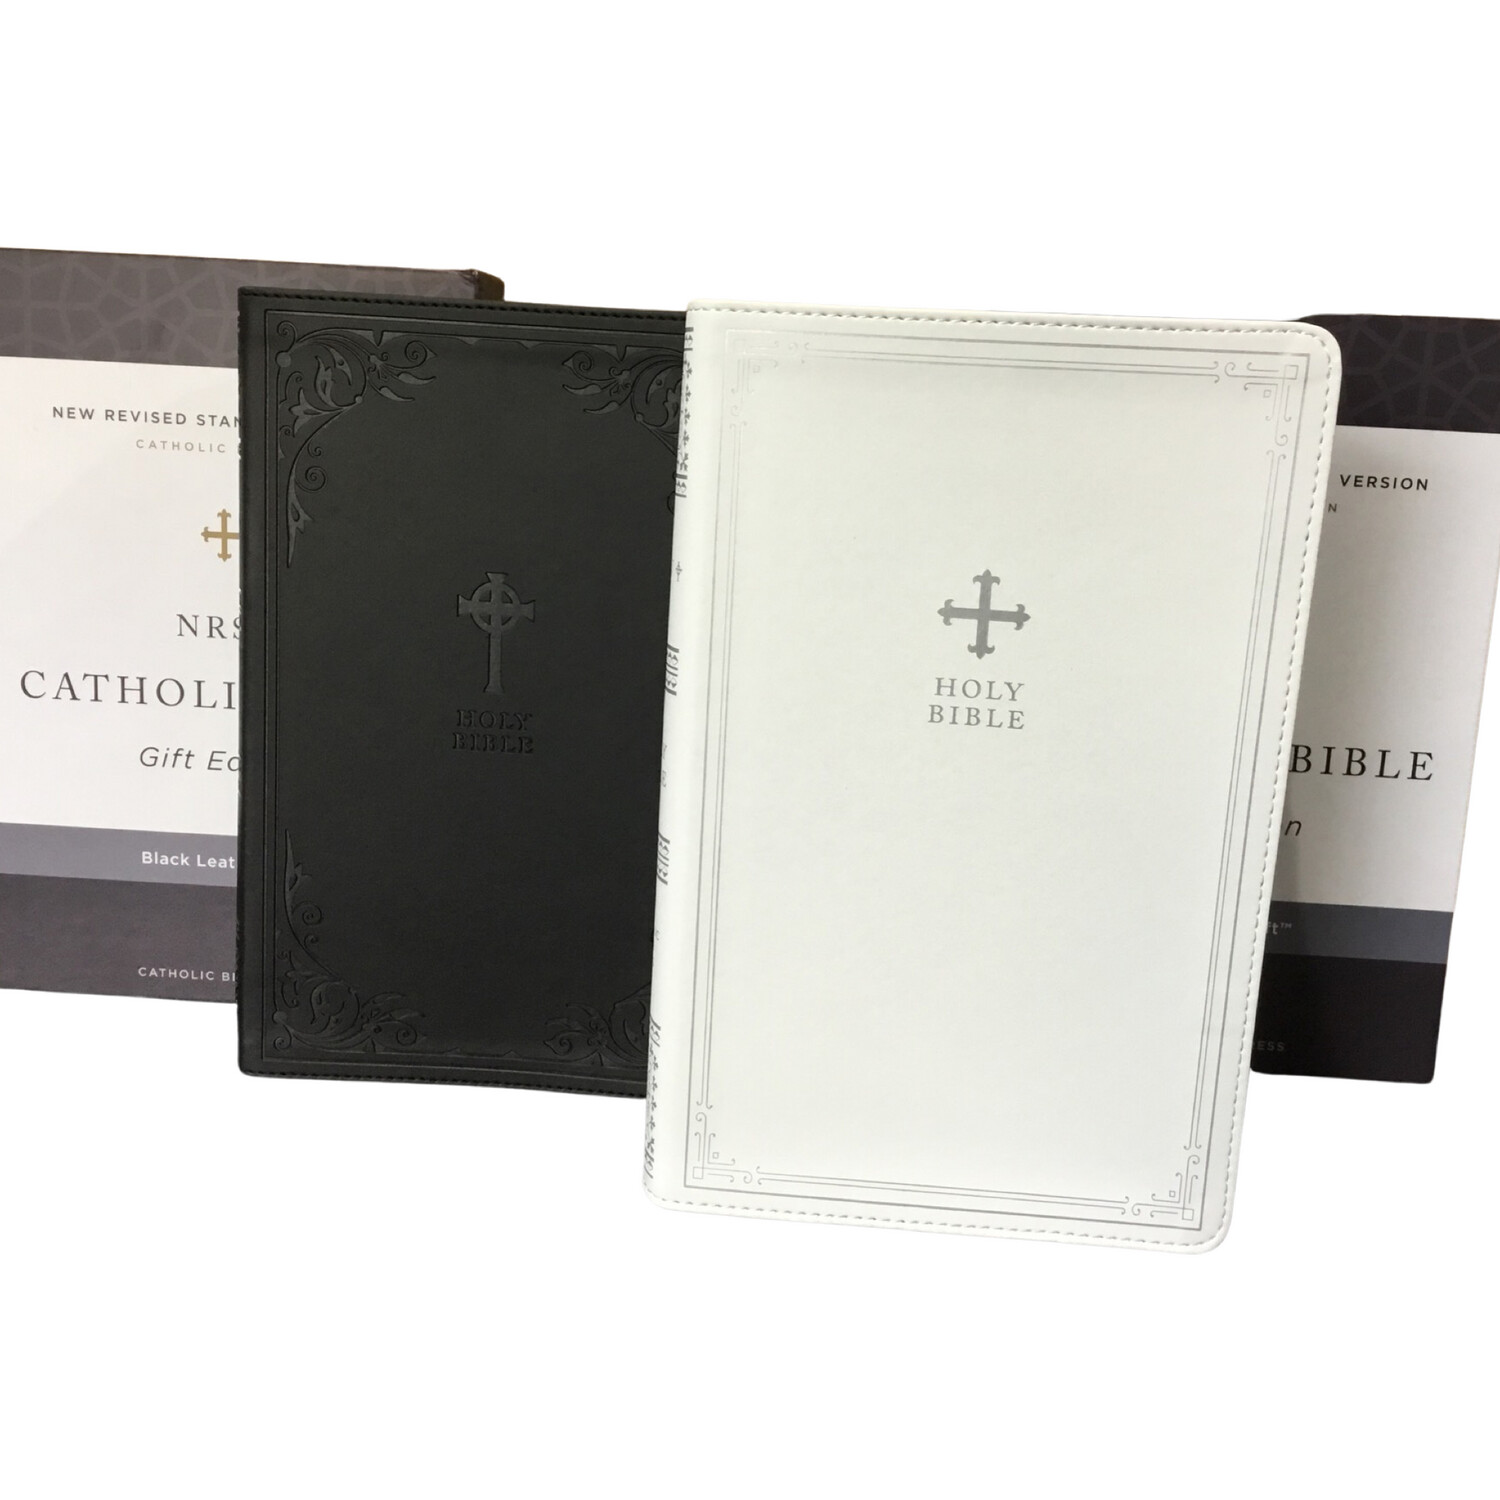 NRSV Catholic Bible Gift Edition, Colour: BLACK